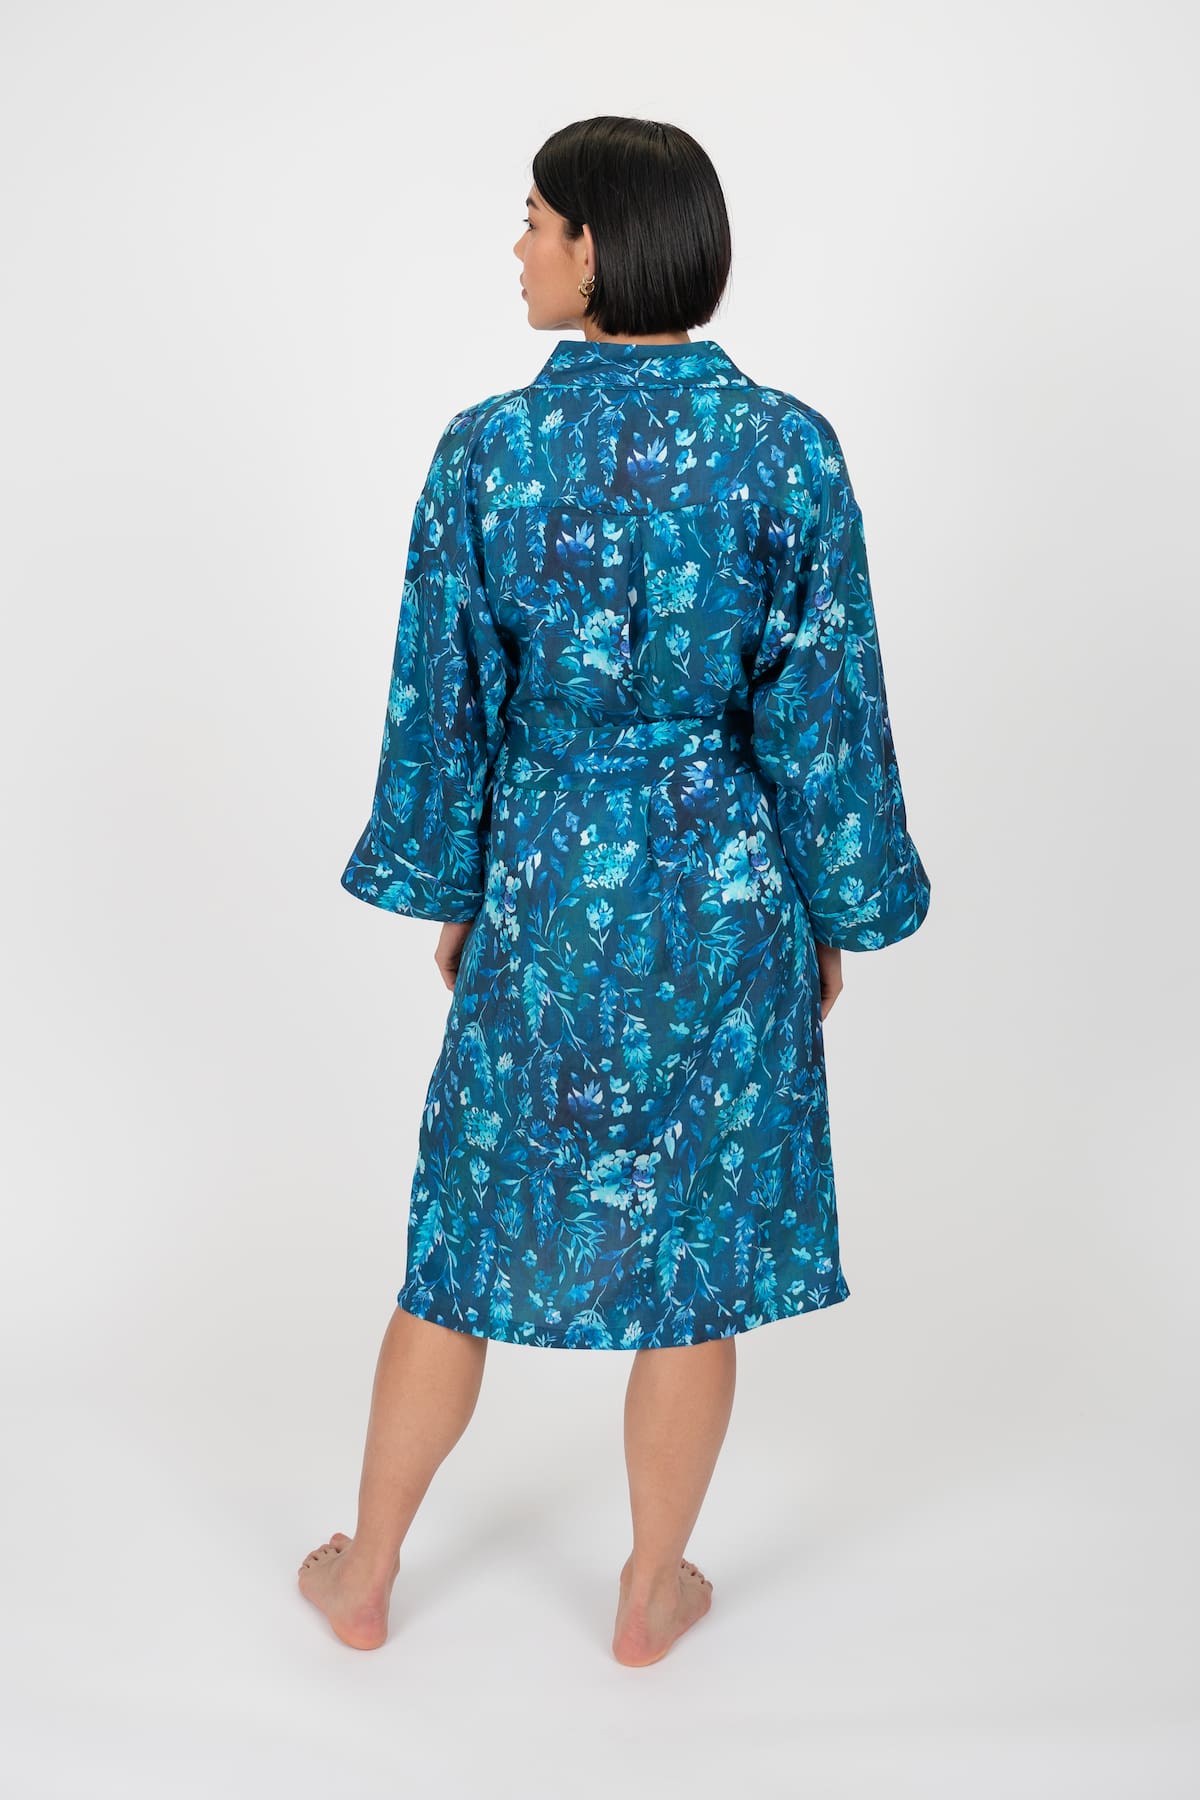 Cerulean Dream Kimono Robe - Front Main 3 - Luxury Kimono Robes - Orchard Moon